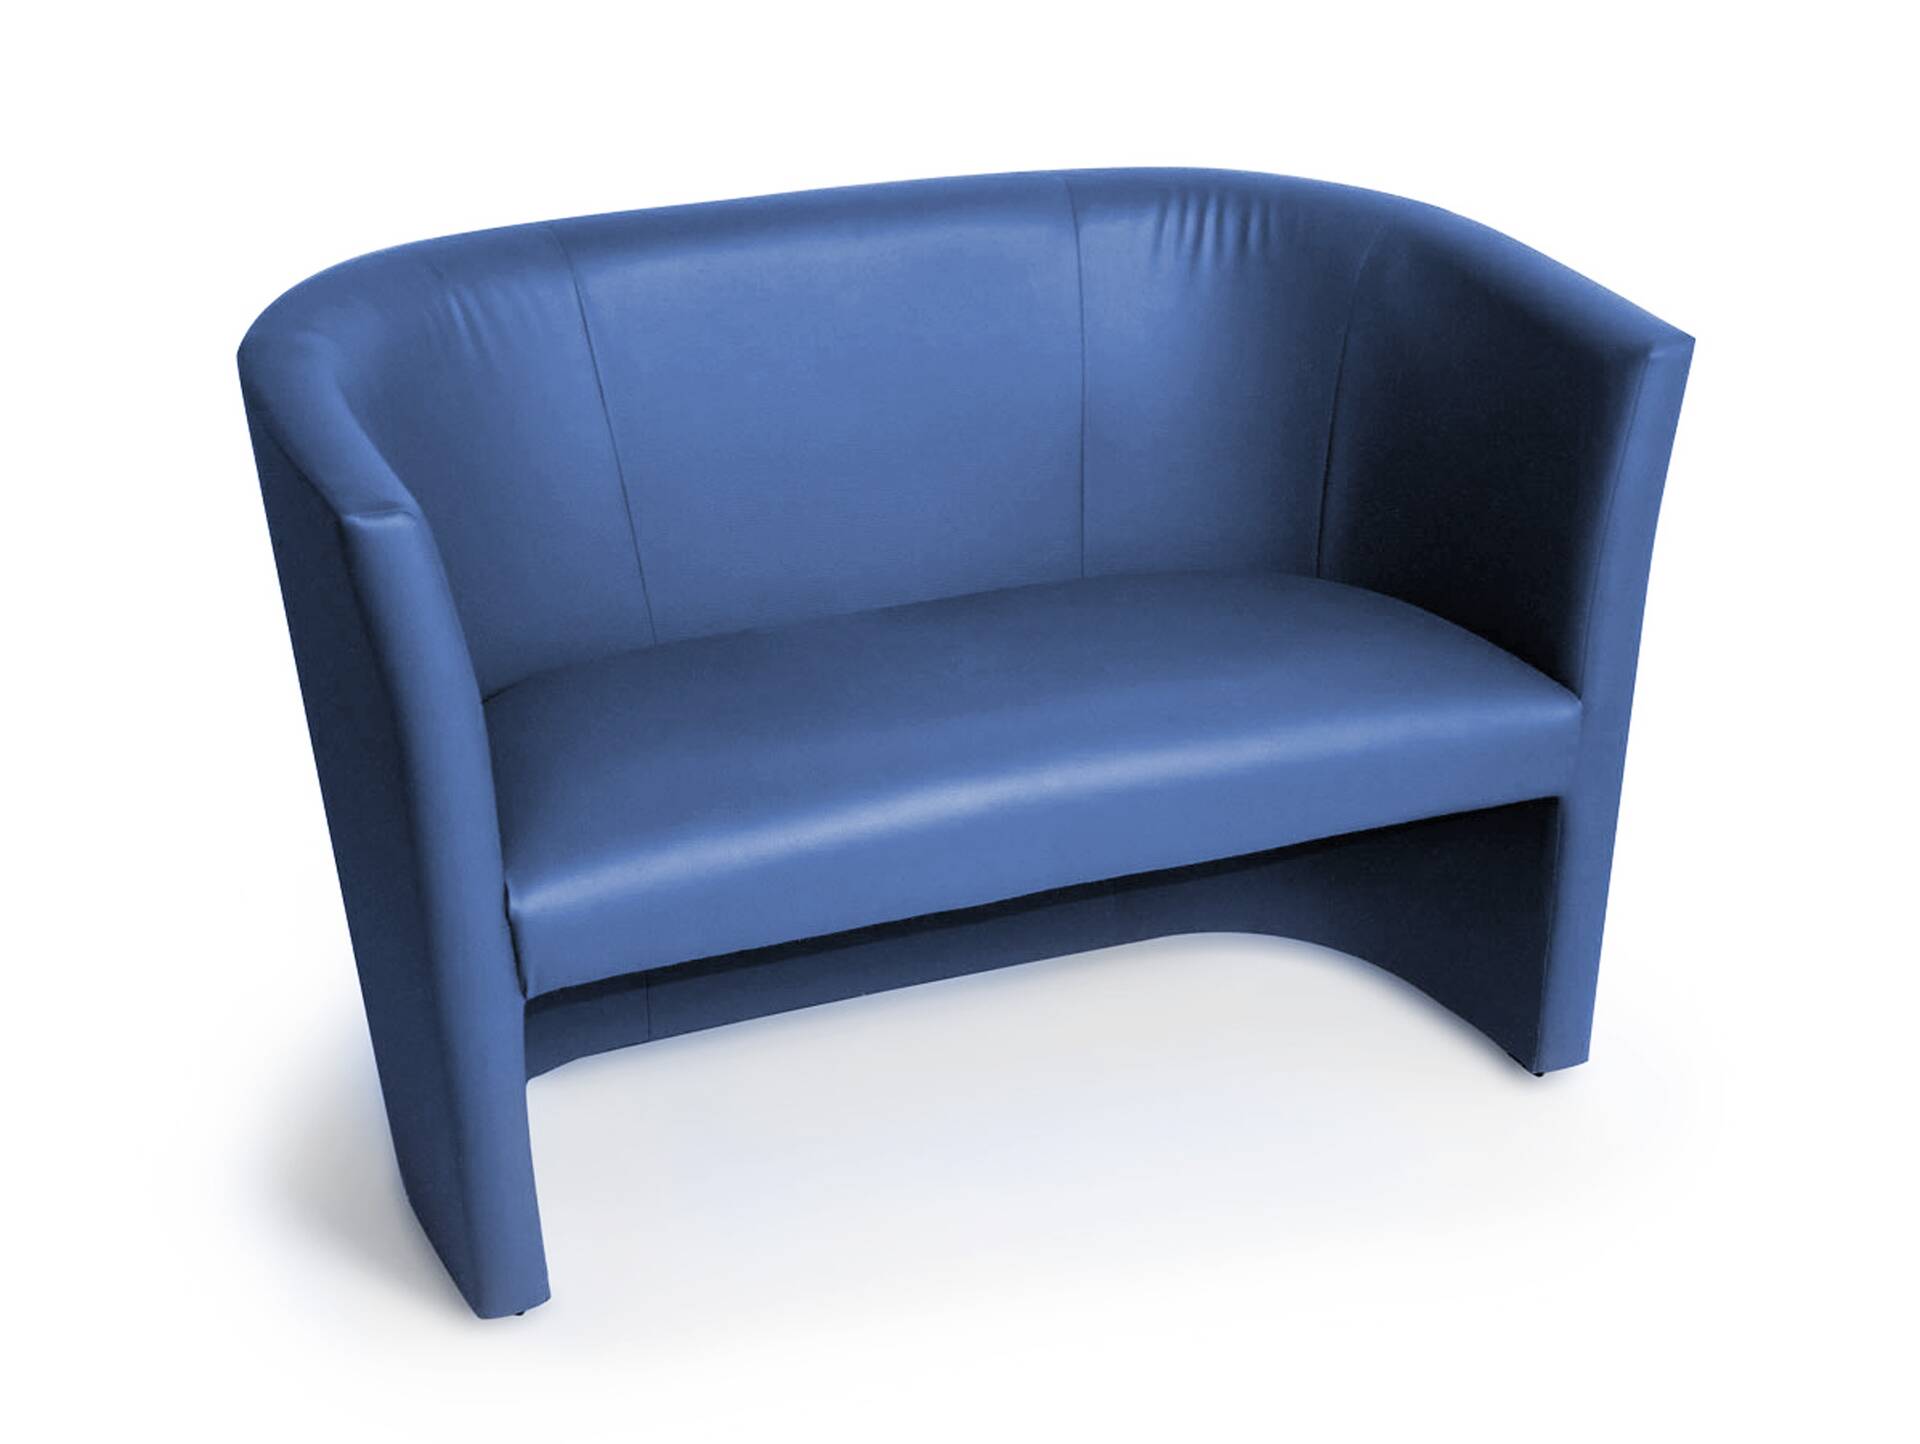 CHARLY DUO Cocktailsessel / Sessel, Material blau Kunstleder